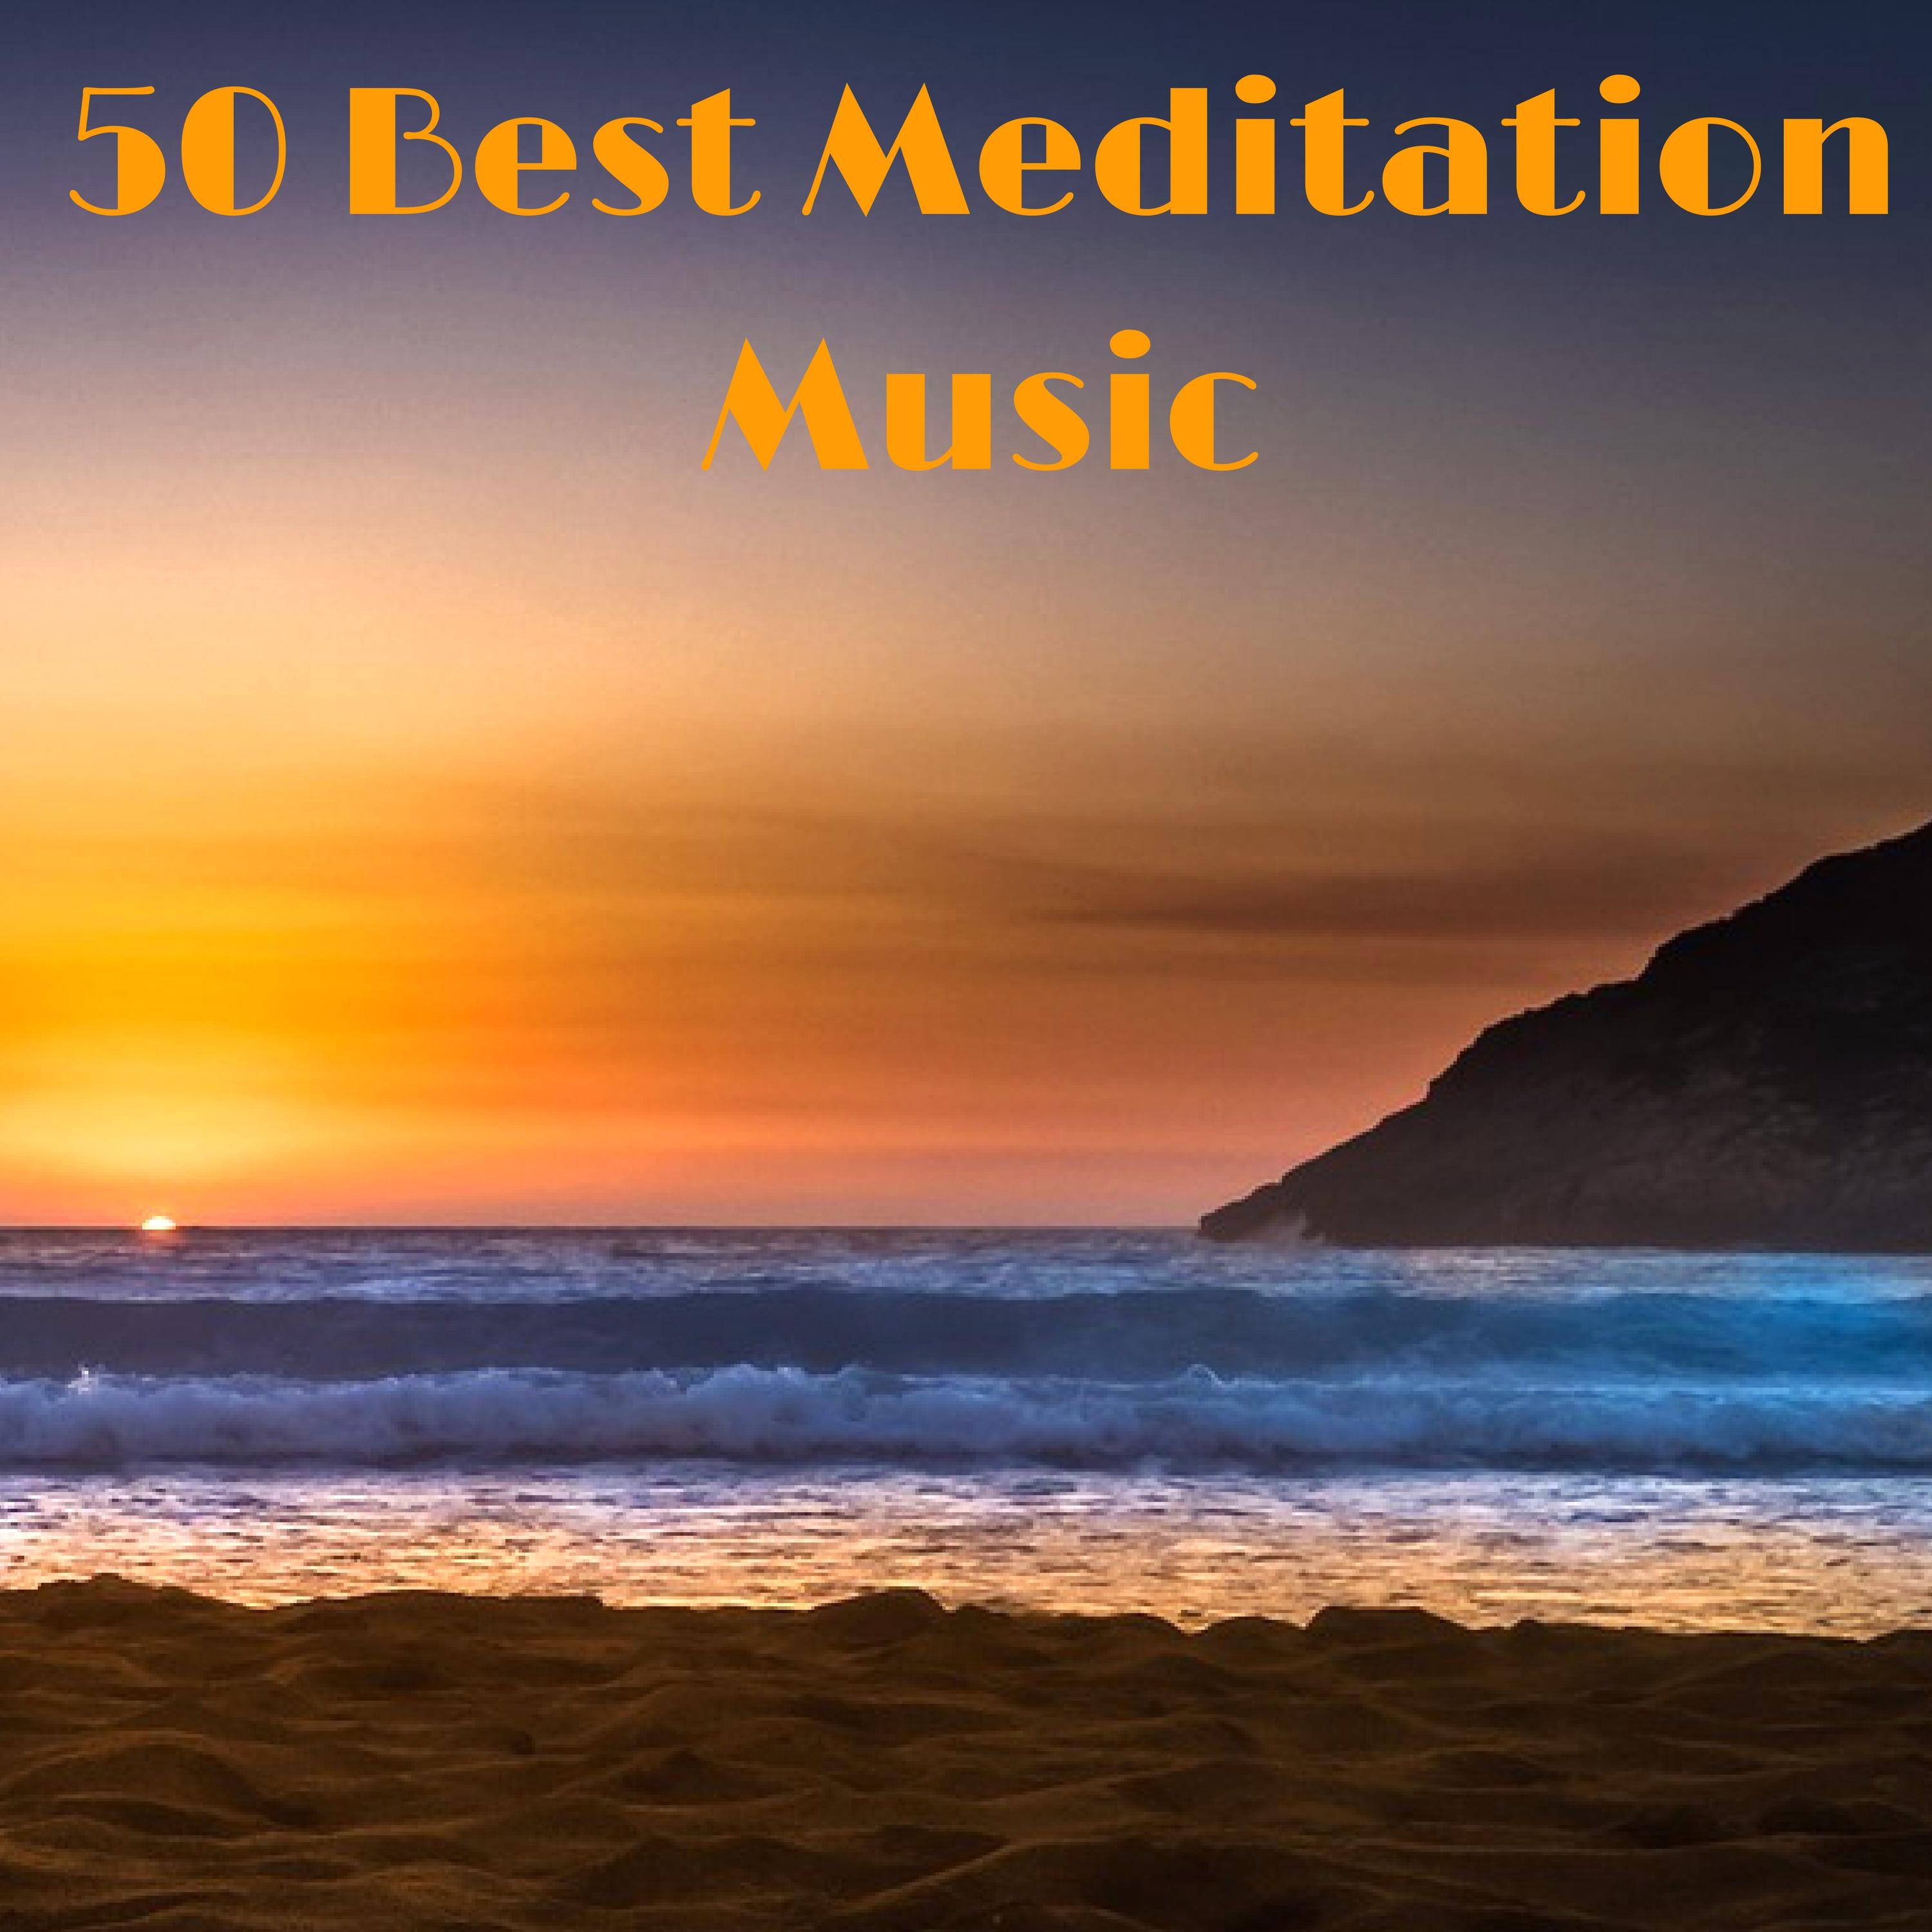 50 Best Meditation Music - Healing Chakra Balancing Sounds to Meditate Mindfully